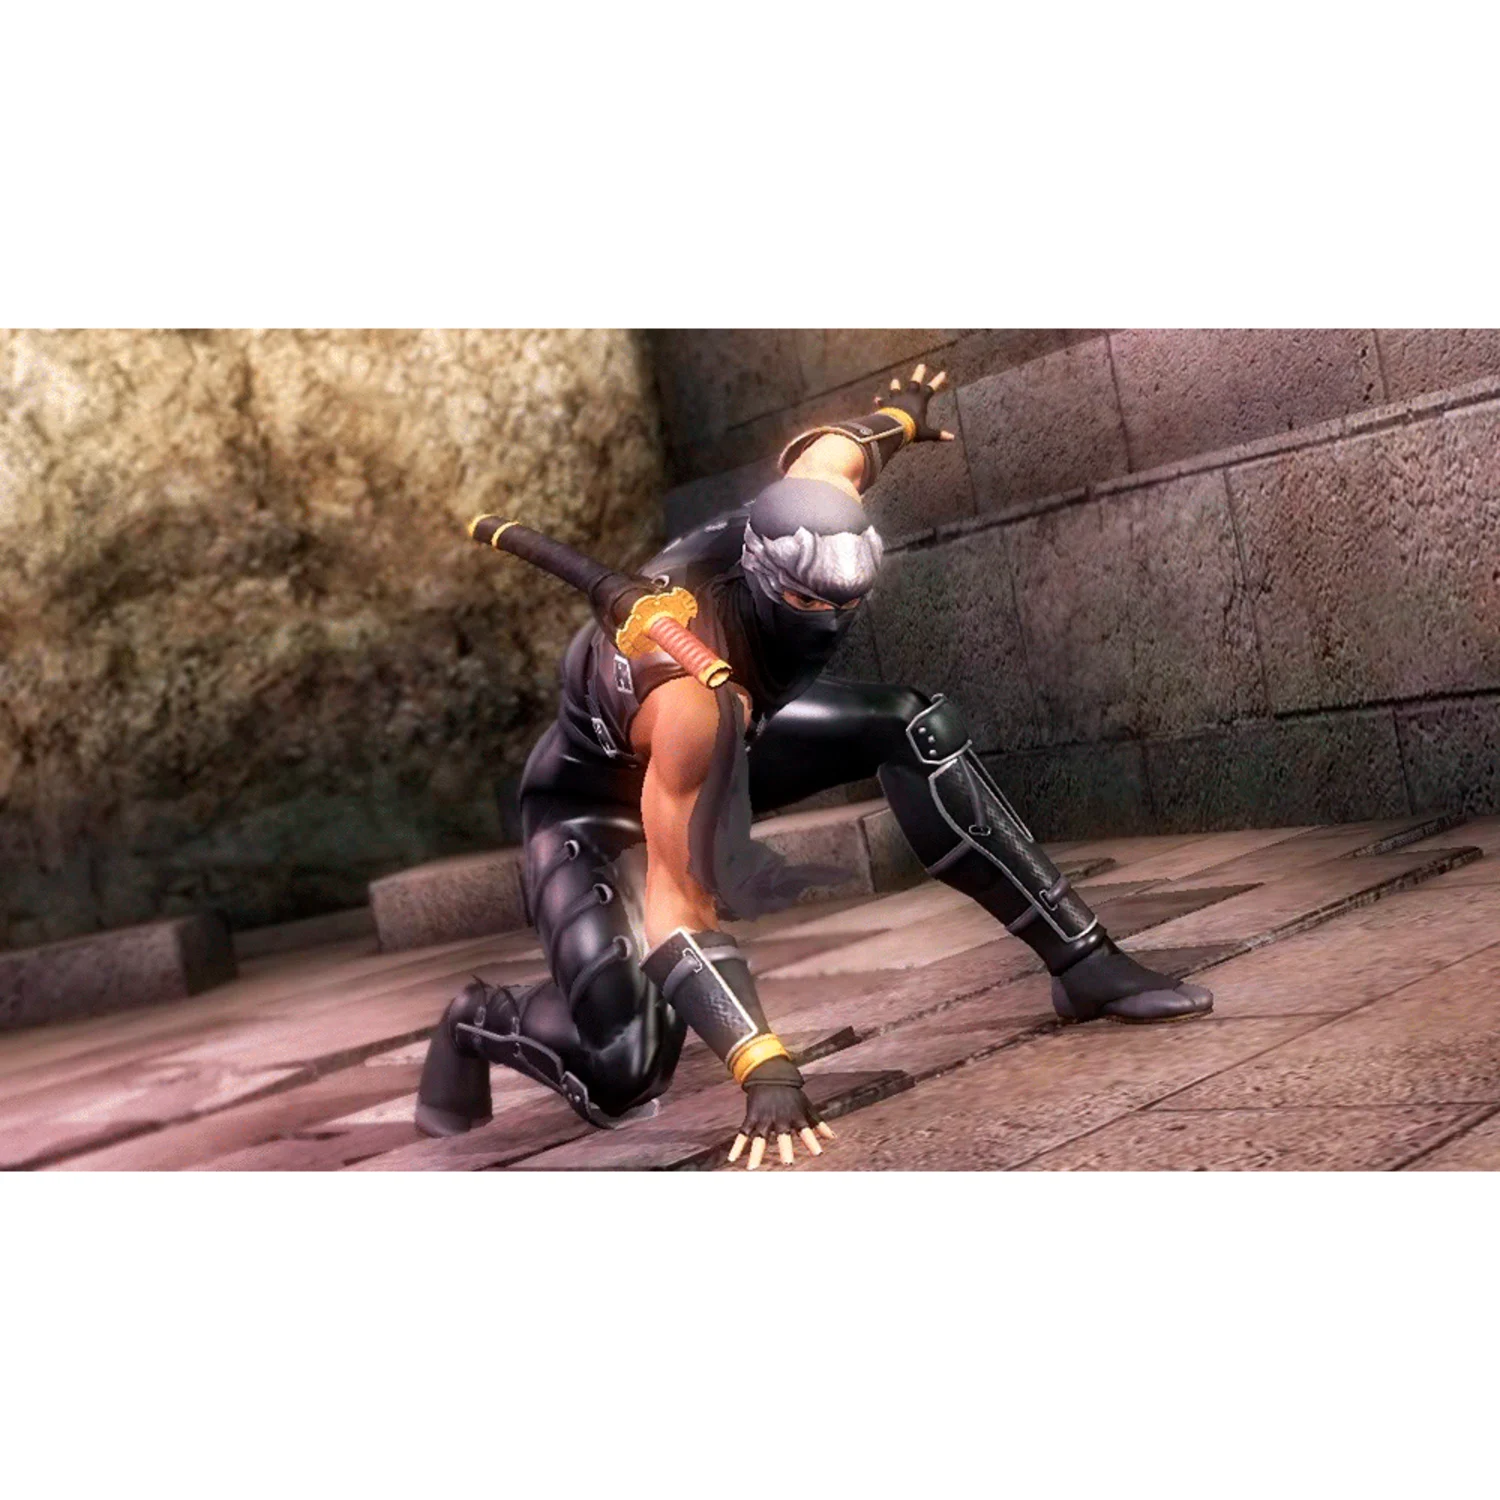 Jogo Ninja Gaiden Master Collection Trilogy para PS4